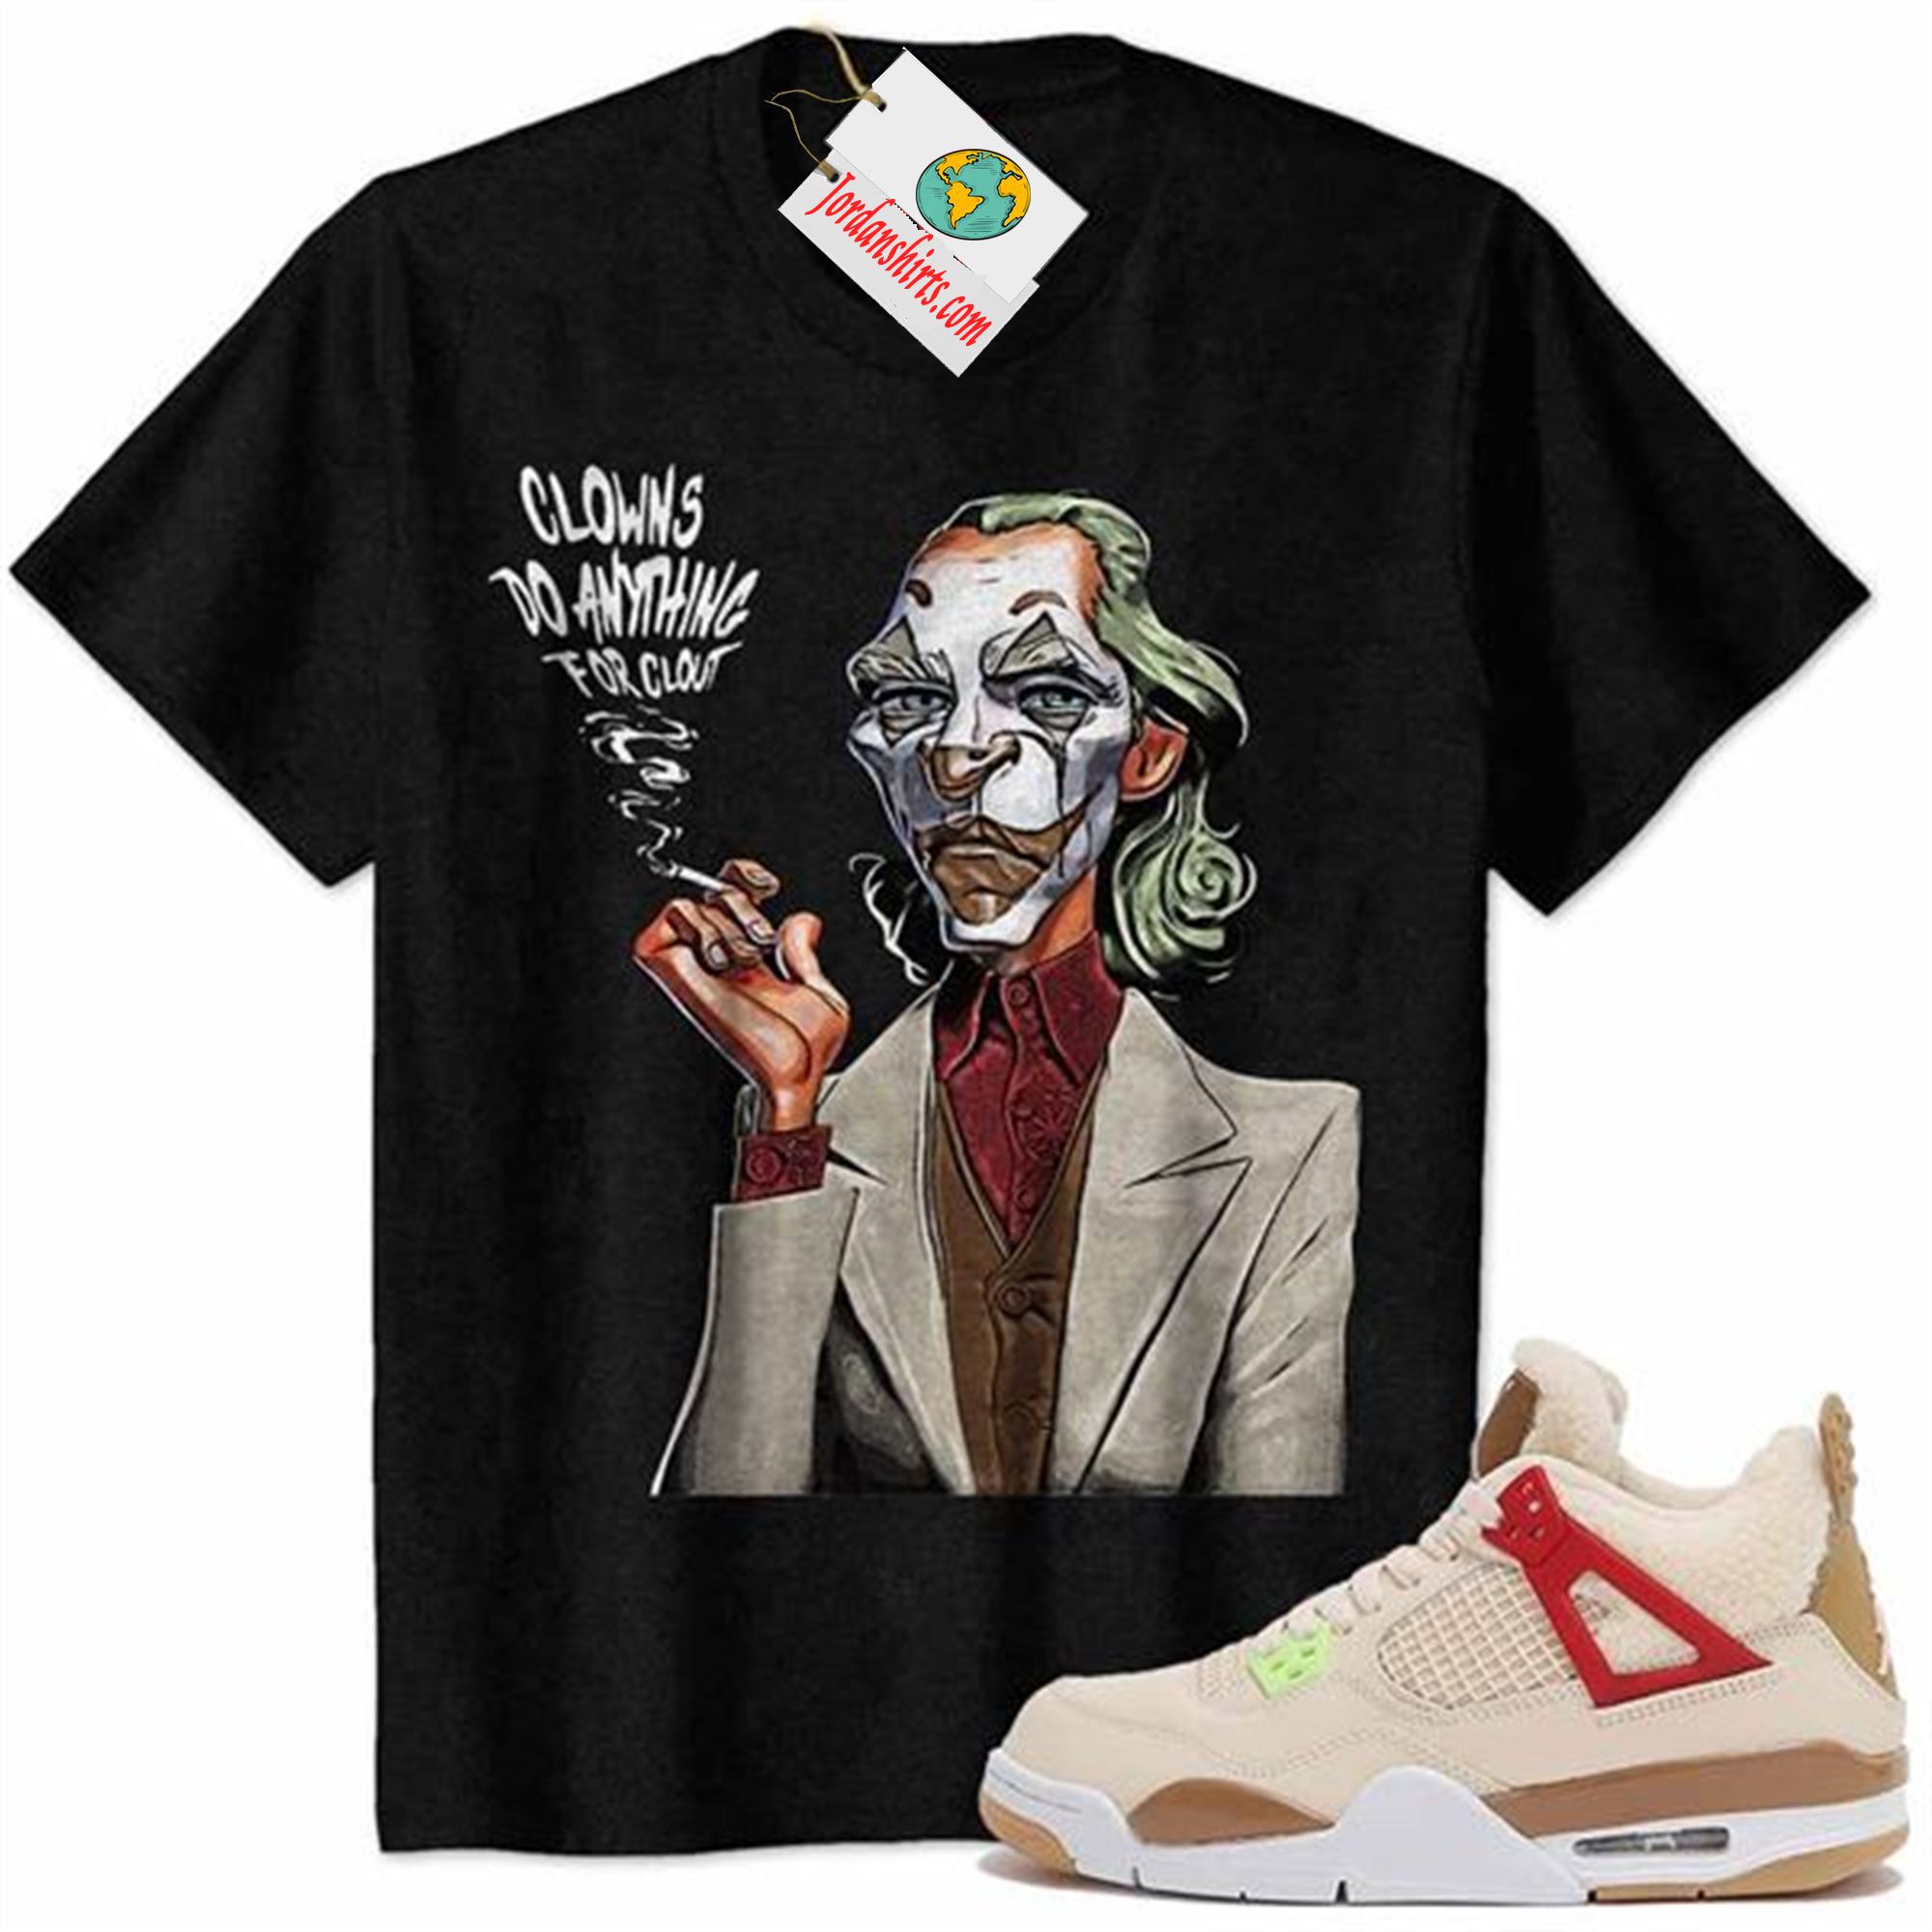 Jordan 4 Shirt, Clowns Do Any Thing For Clout Black Air Jordan 4 Wild Things 4s Size Up To 5xl